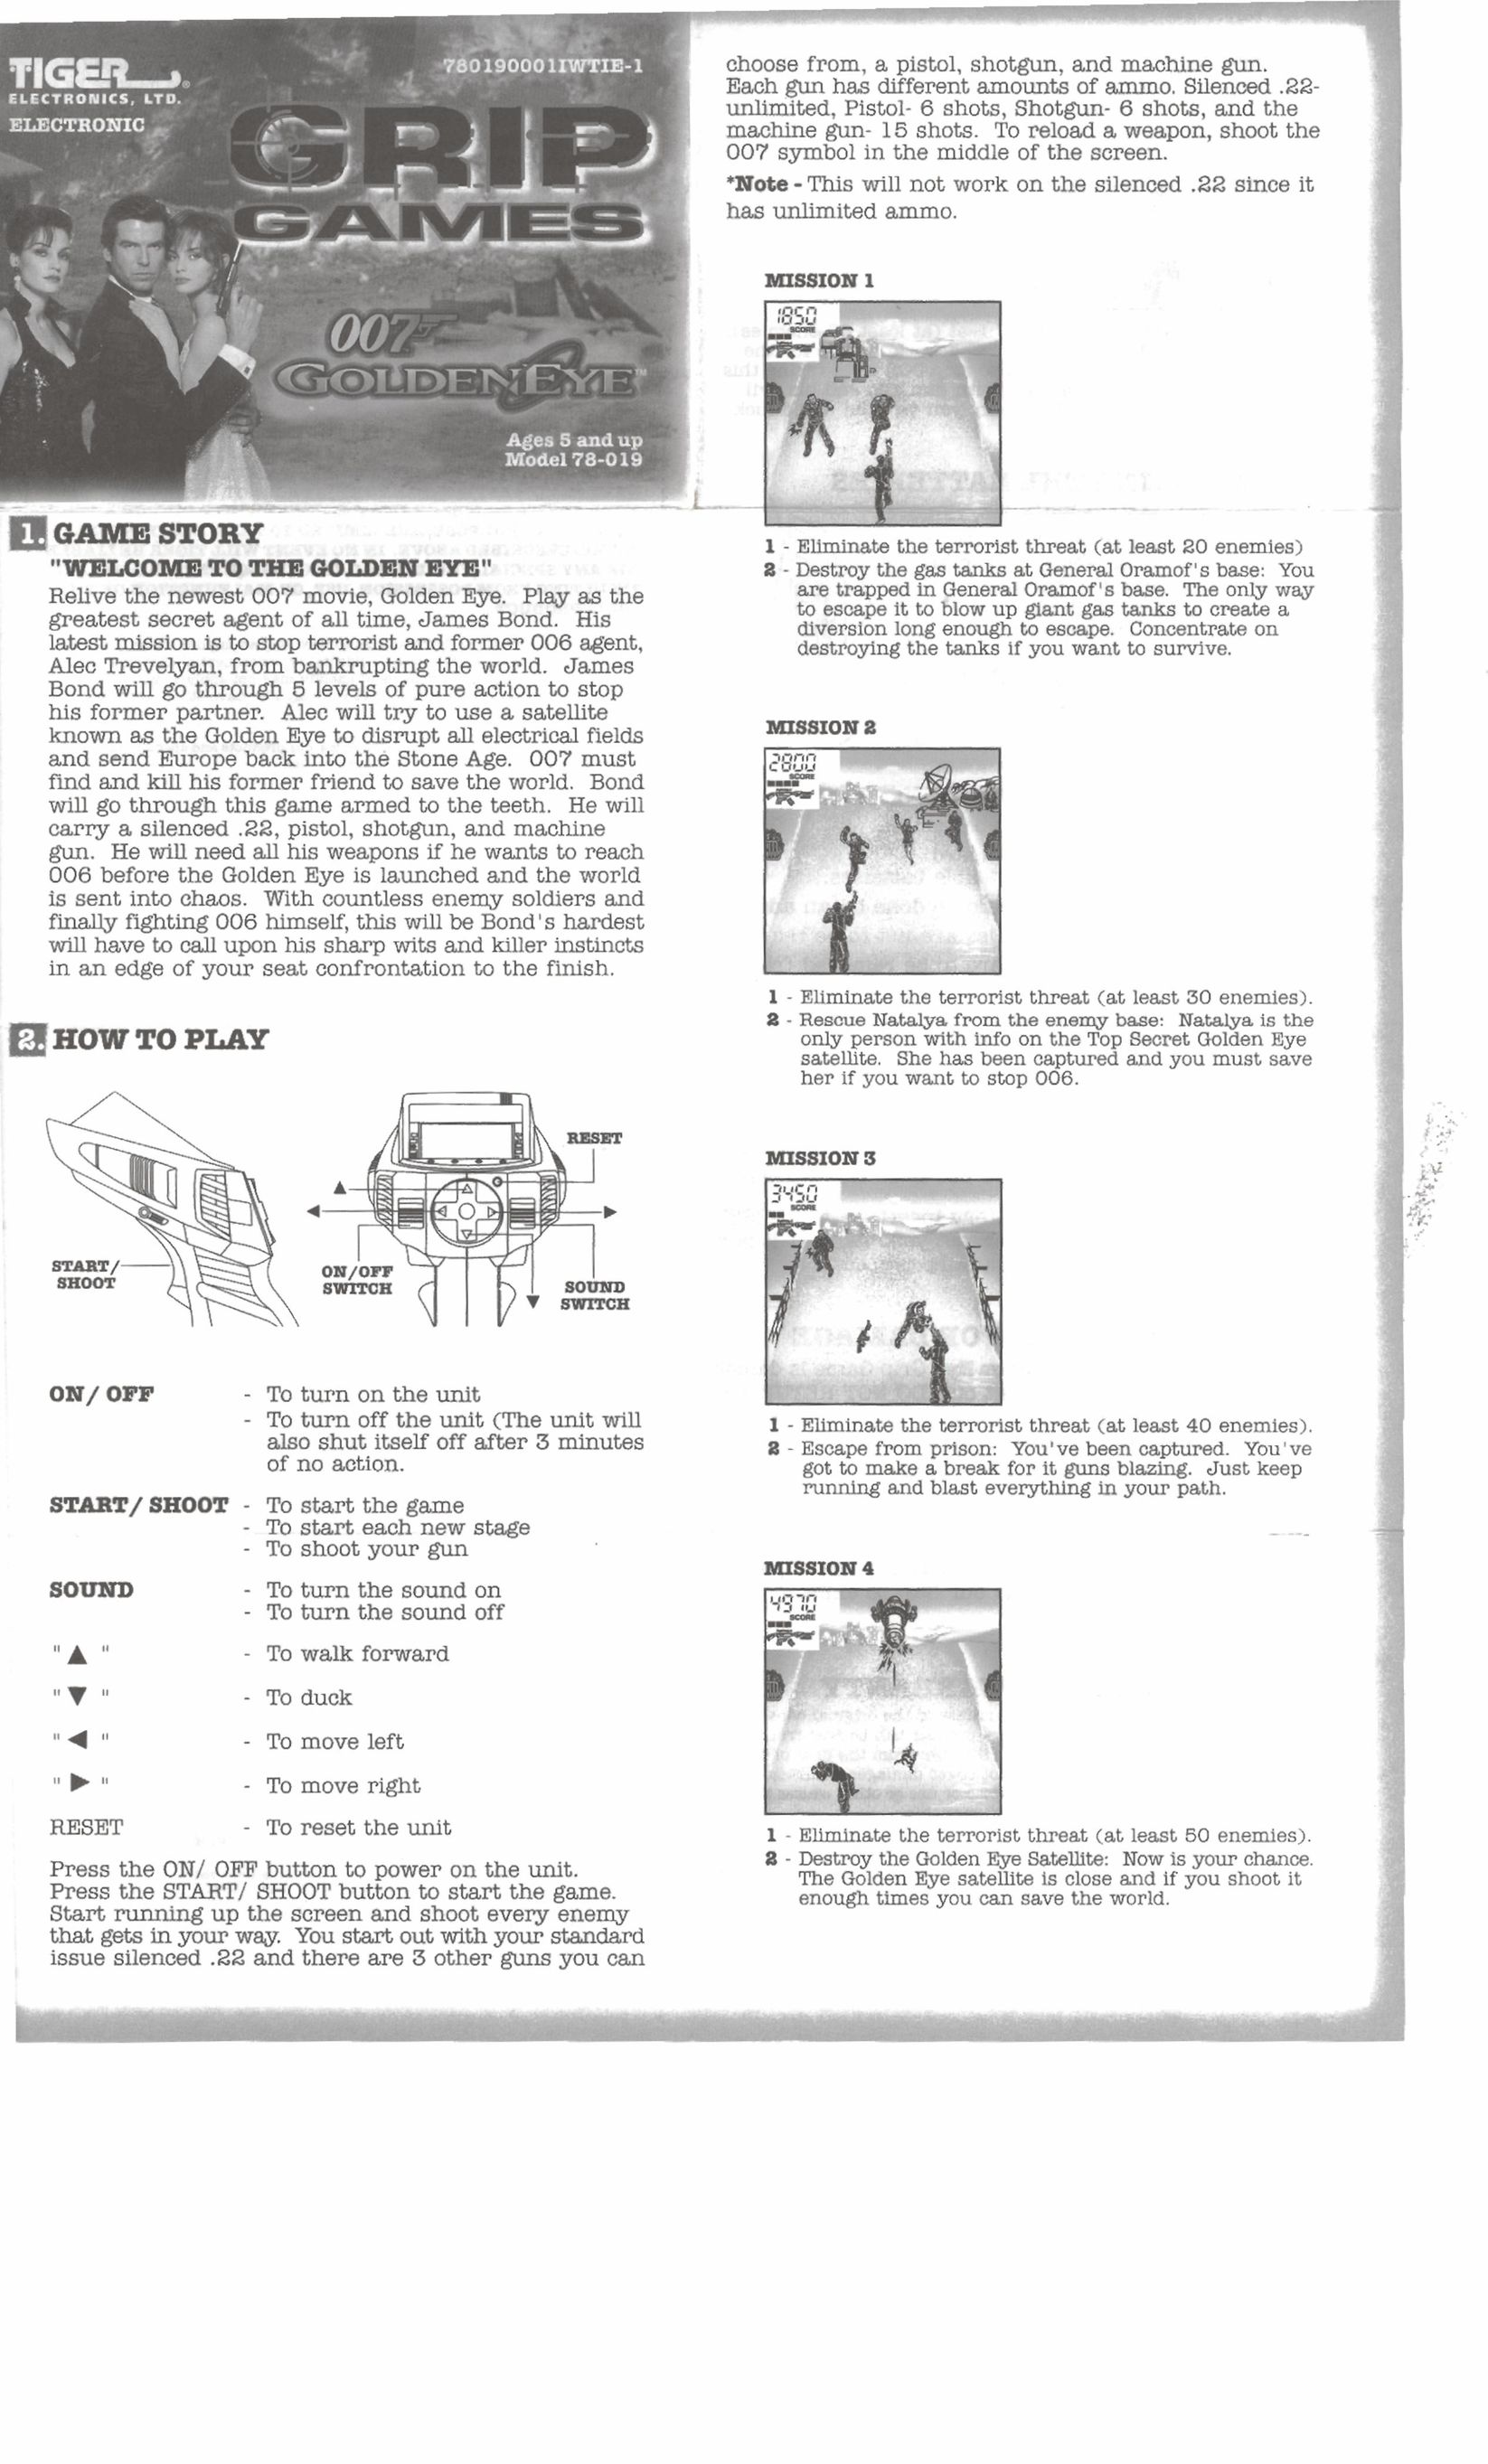 Hasbro 007 Golden Eye Games User Manual